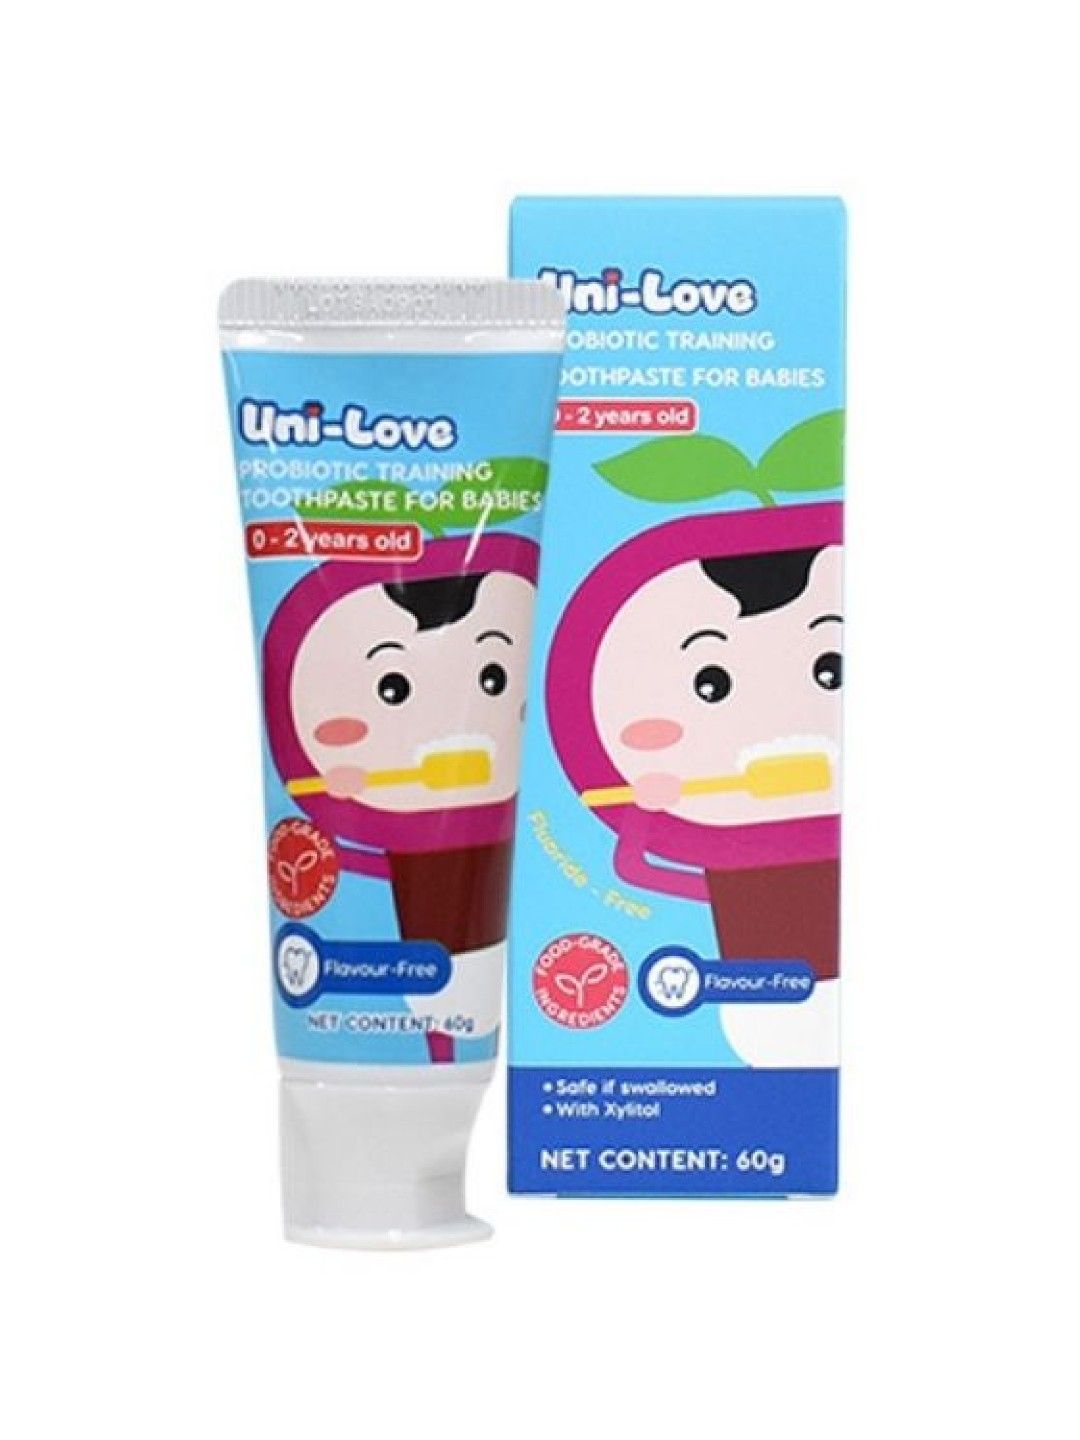 Uni-love Probiotic Training Toothpaste - Flavour-Free